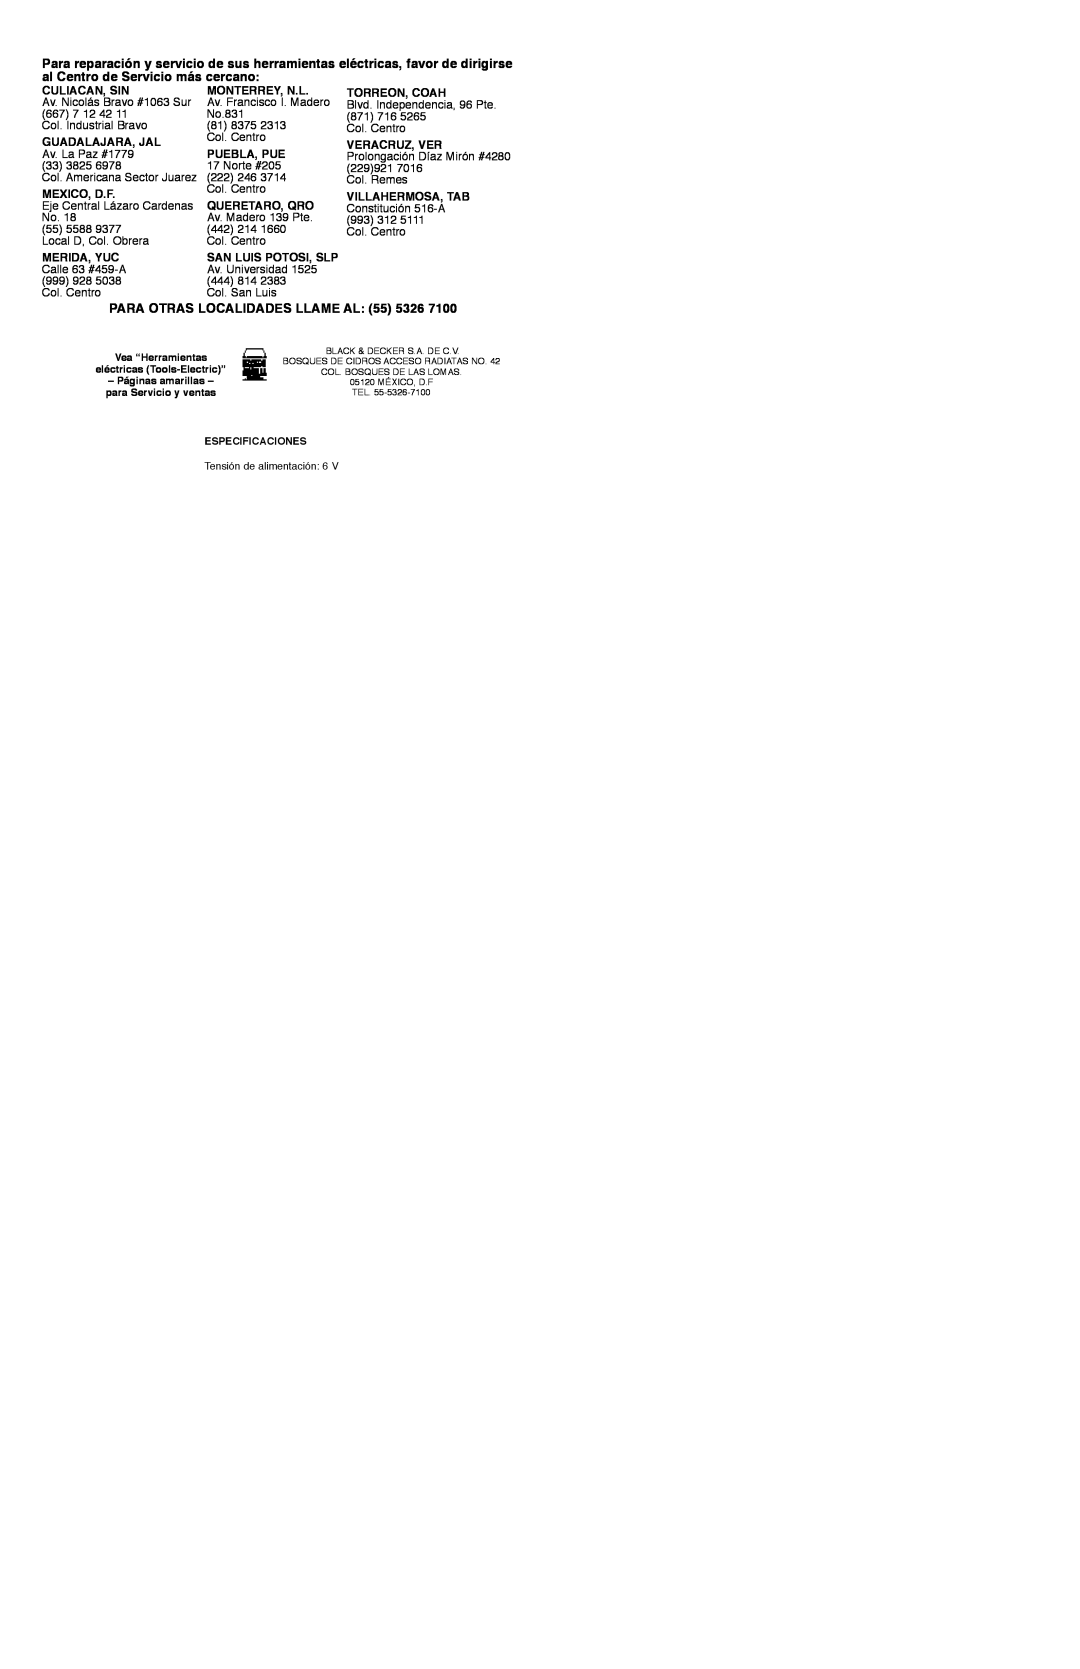 Black & Decker SNC100B instruction manual PARA OTRAS LOCALIDADES LLAME AL 55 5326 